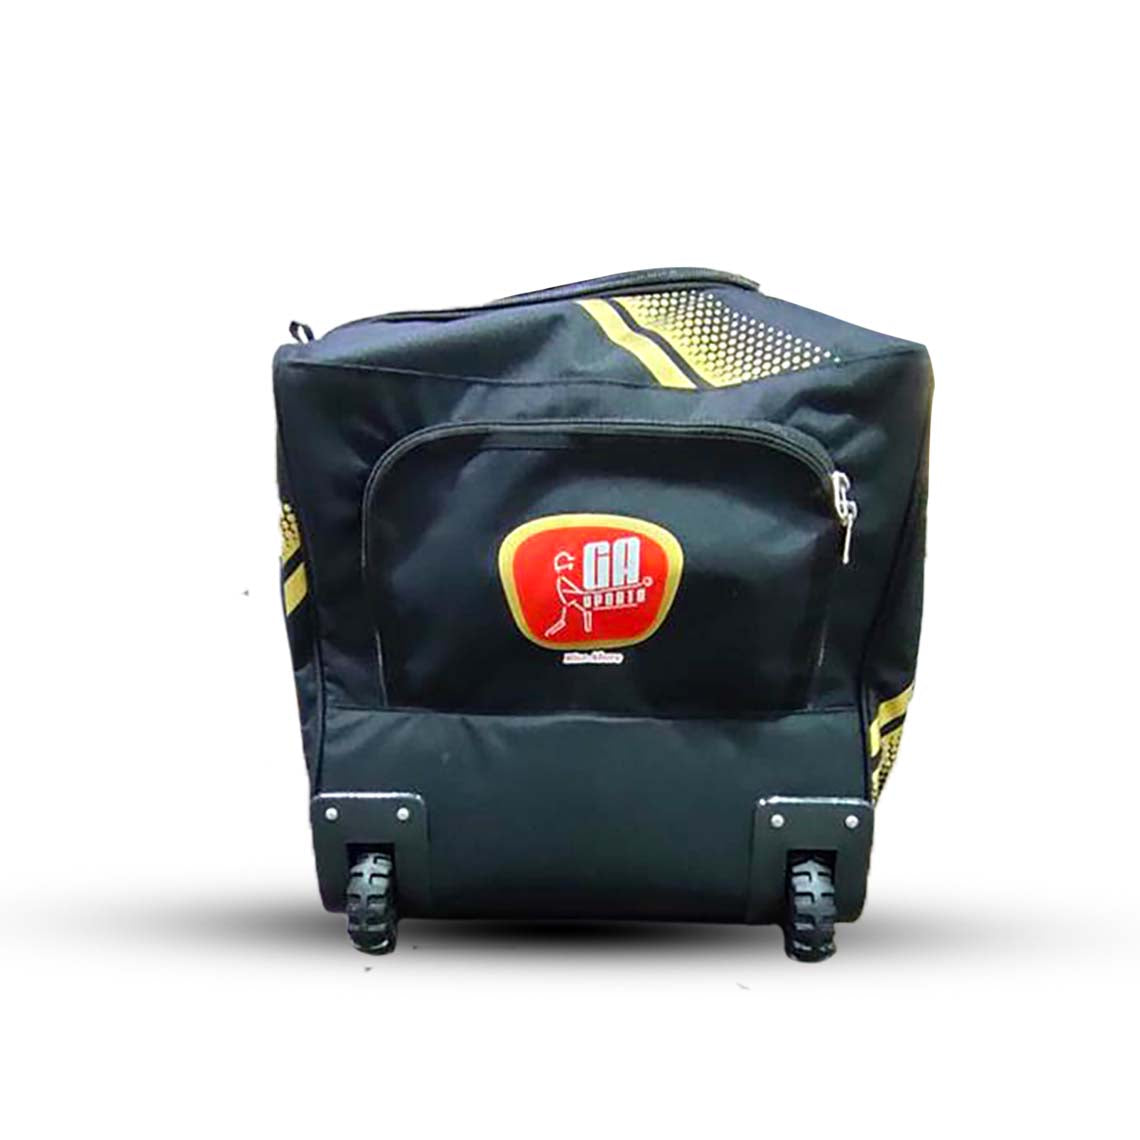 GA Limited Edition Wheelie Kit Bag